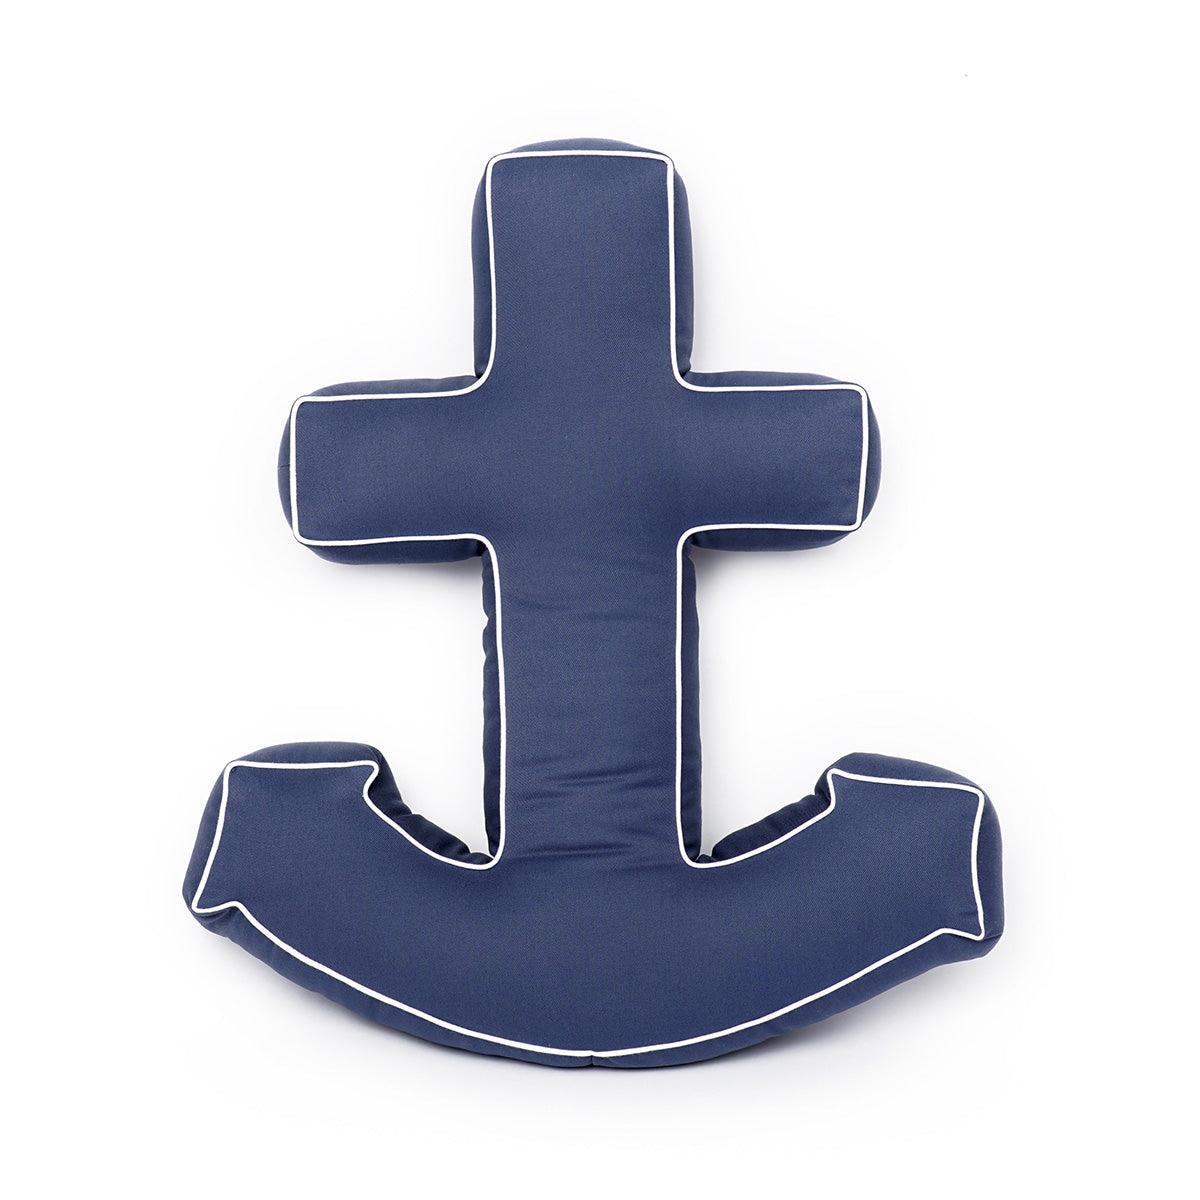 Anchor Cushion Navy | Anchor Shaped Cushion Navy - www.bettyshome.com